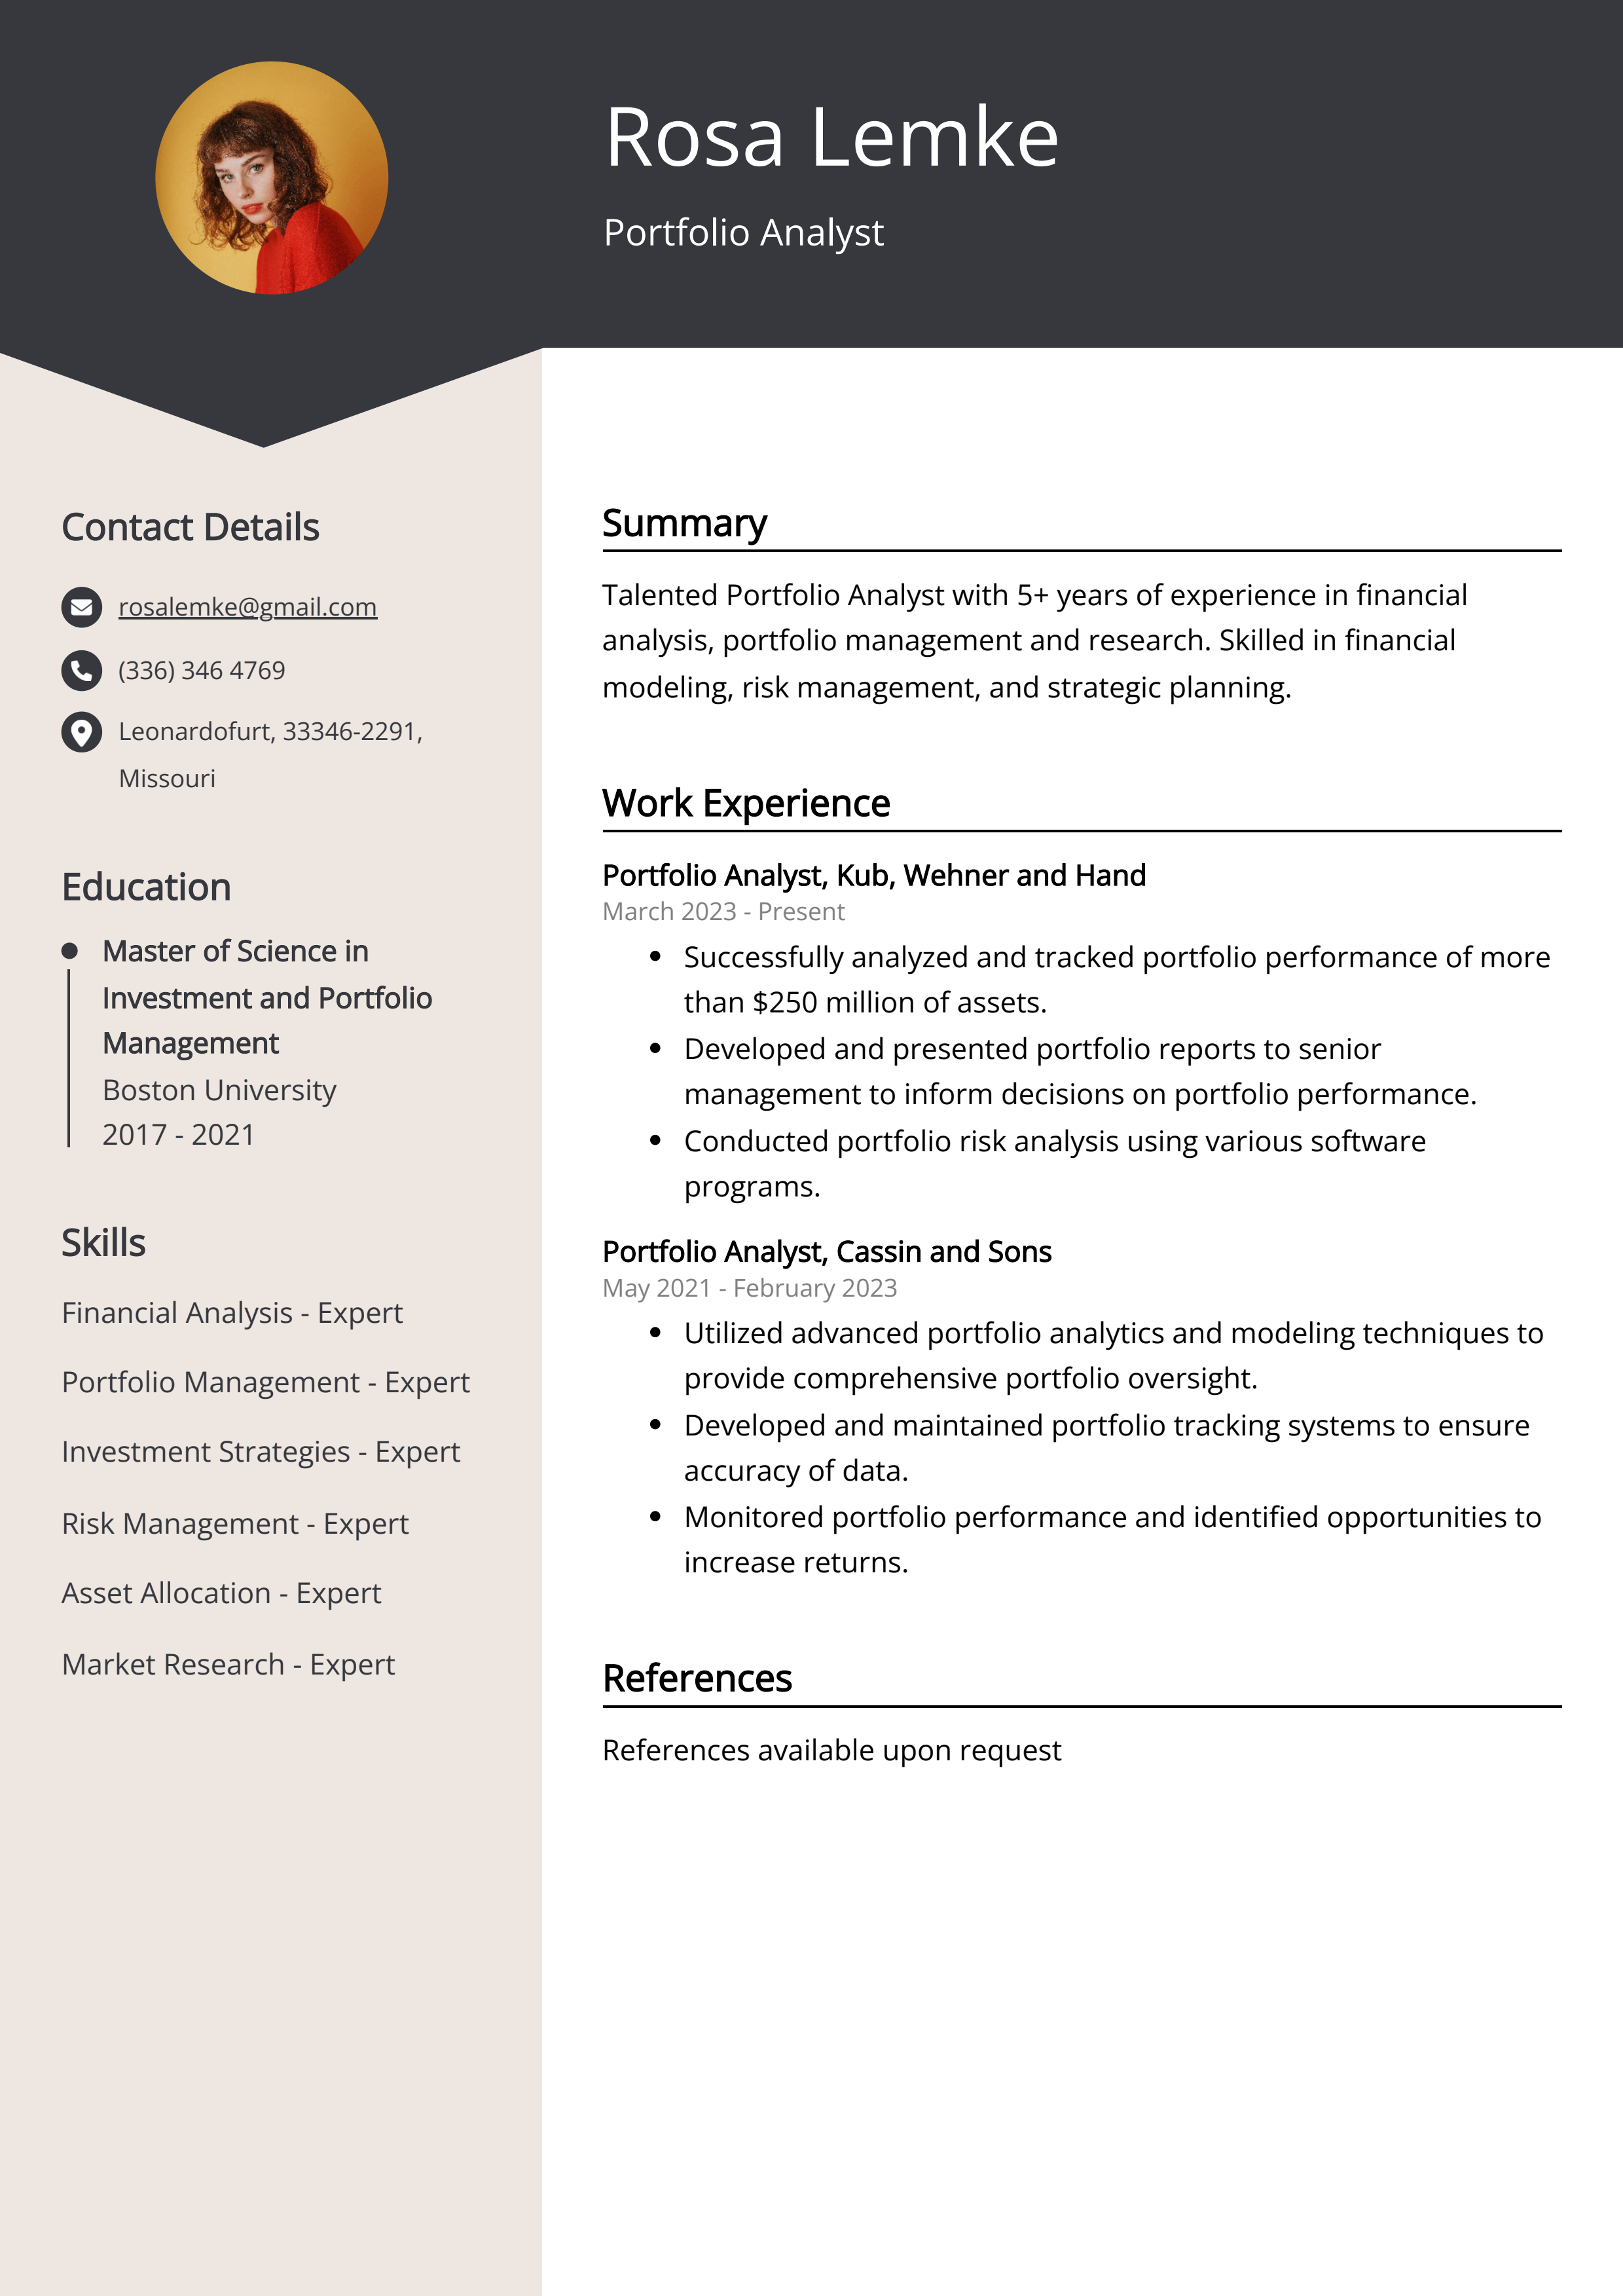 Portfolio Analyst CV Example